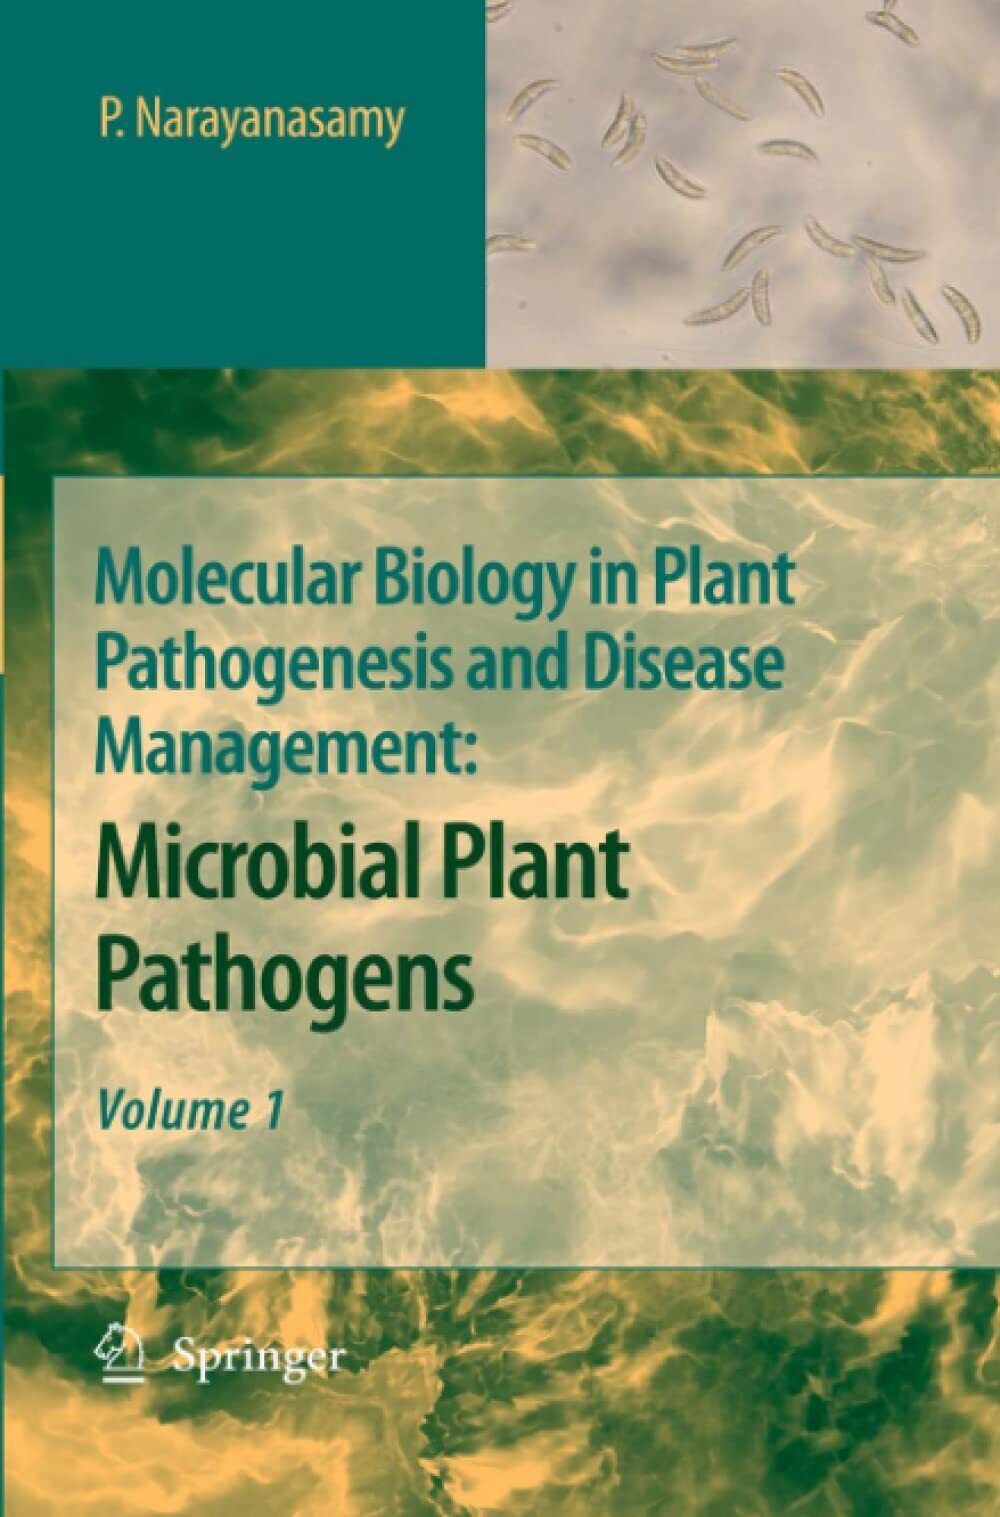 Molecular Biology in Plant Pathogenesis and Disease Management vol. 1 - 2010 libro usato